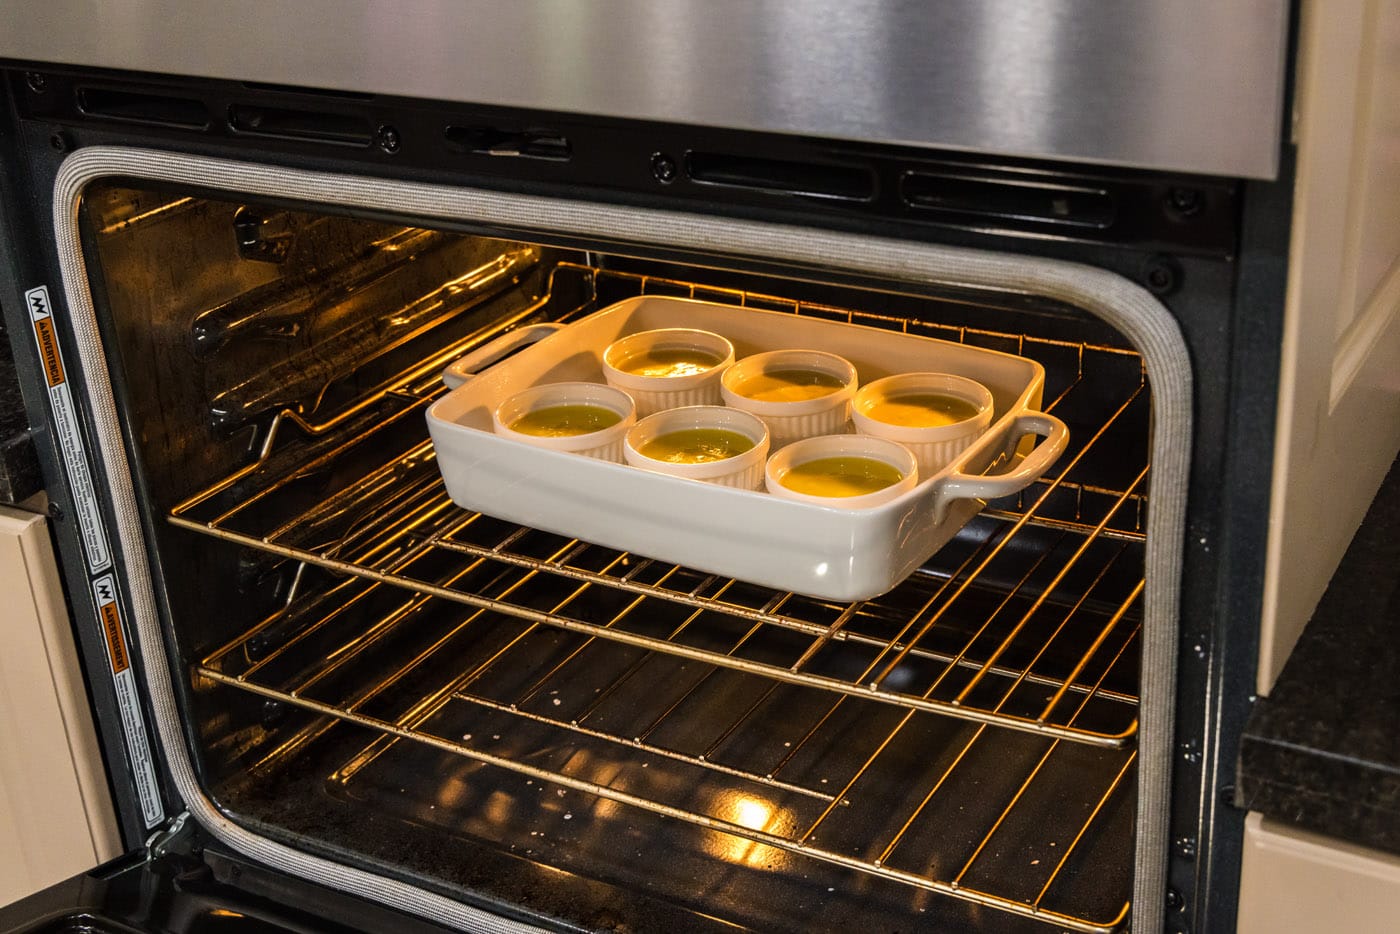 custard in ramekins placed in the oven in a baking dish